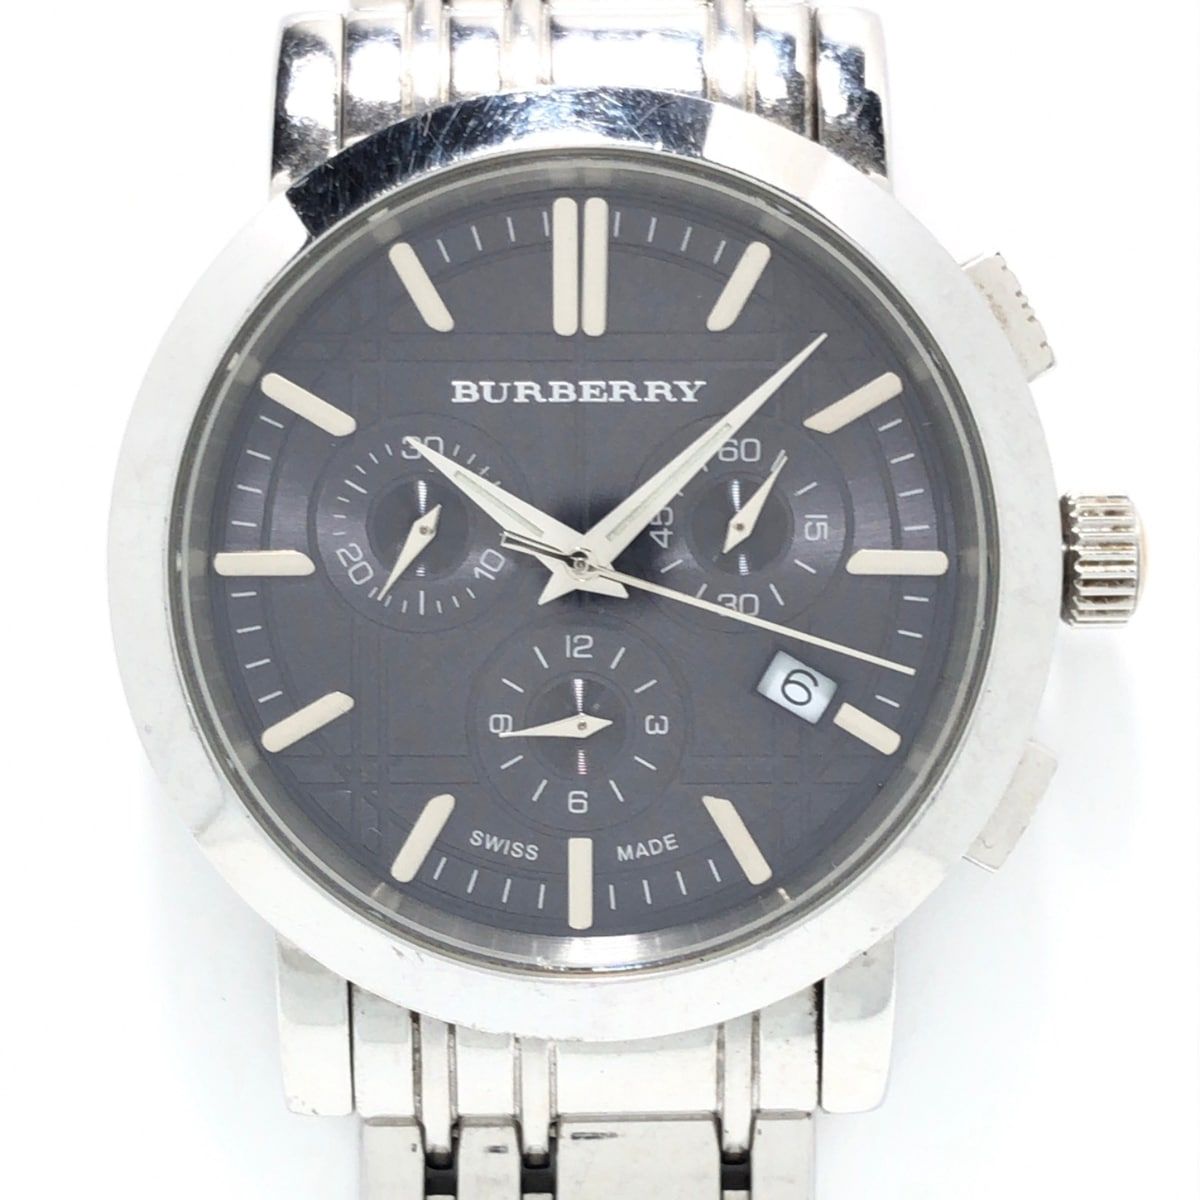 Burberry(バーバリー) 腕時計 - BU1360 メンズ クロノグラフ 